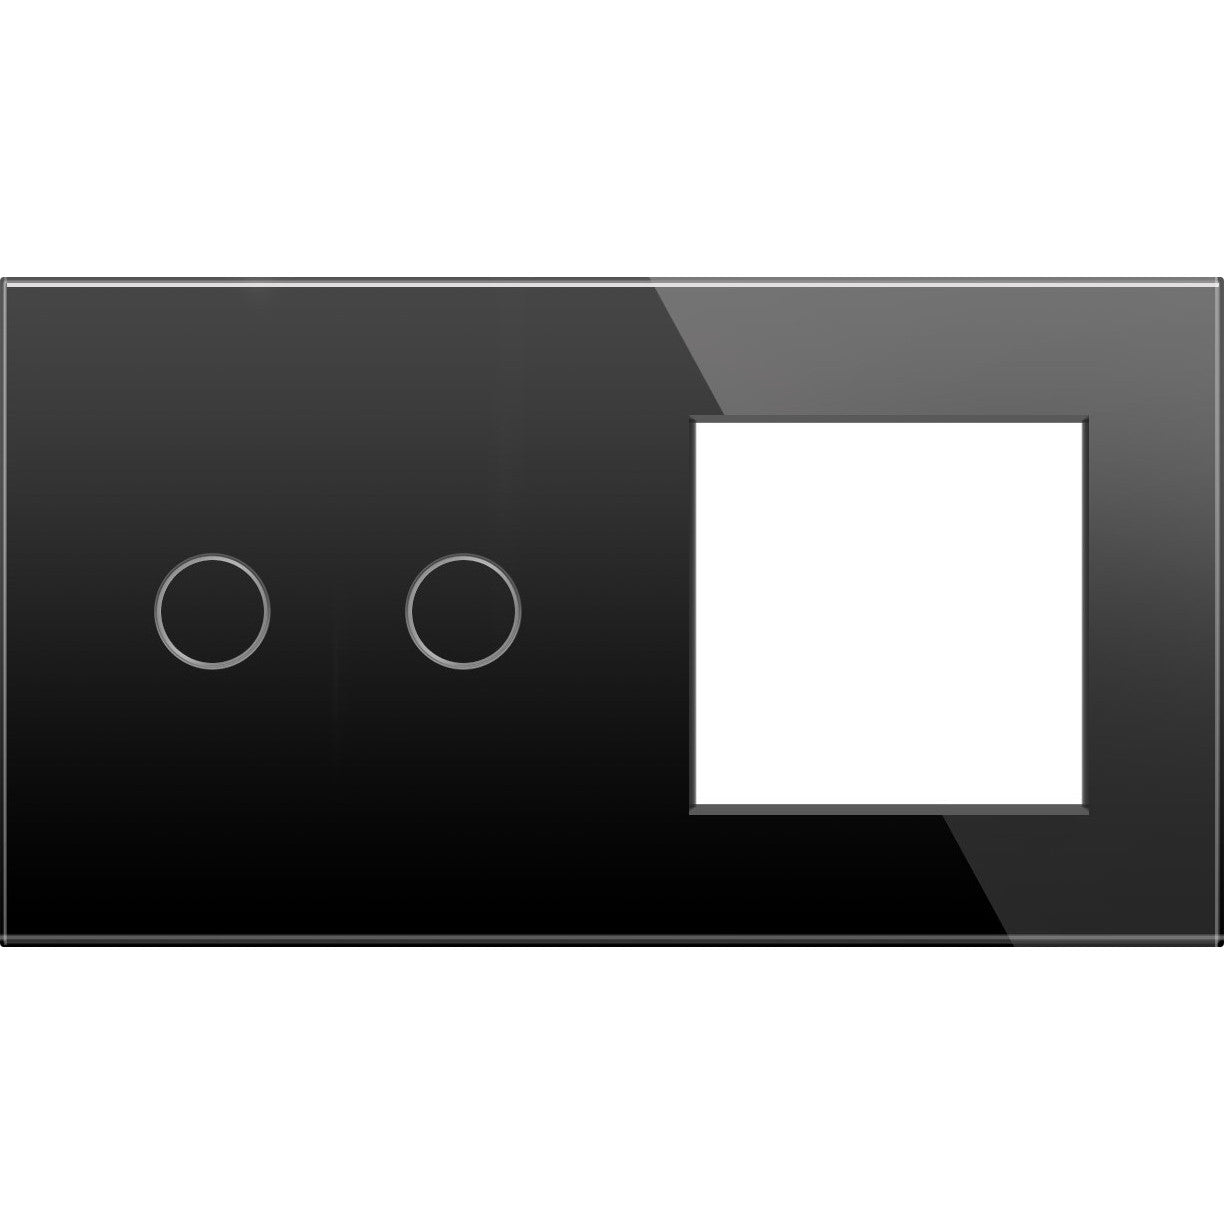 Panel de vidrio 2 módulos 1 marco negro